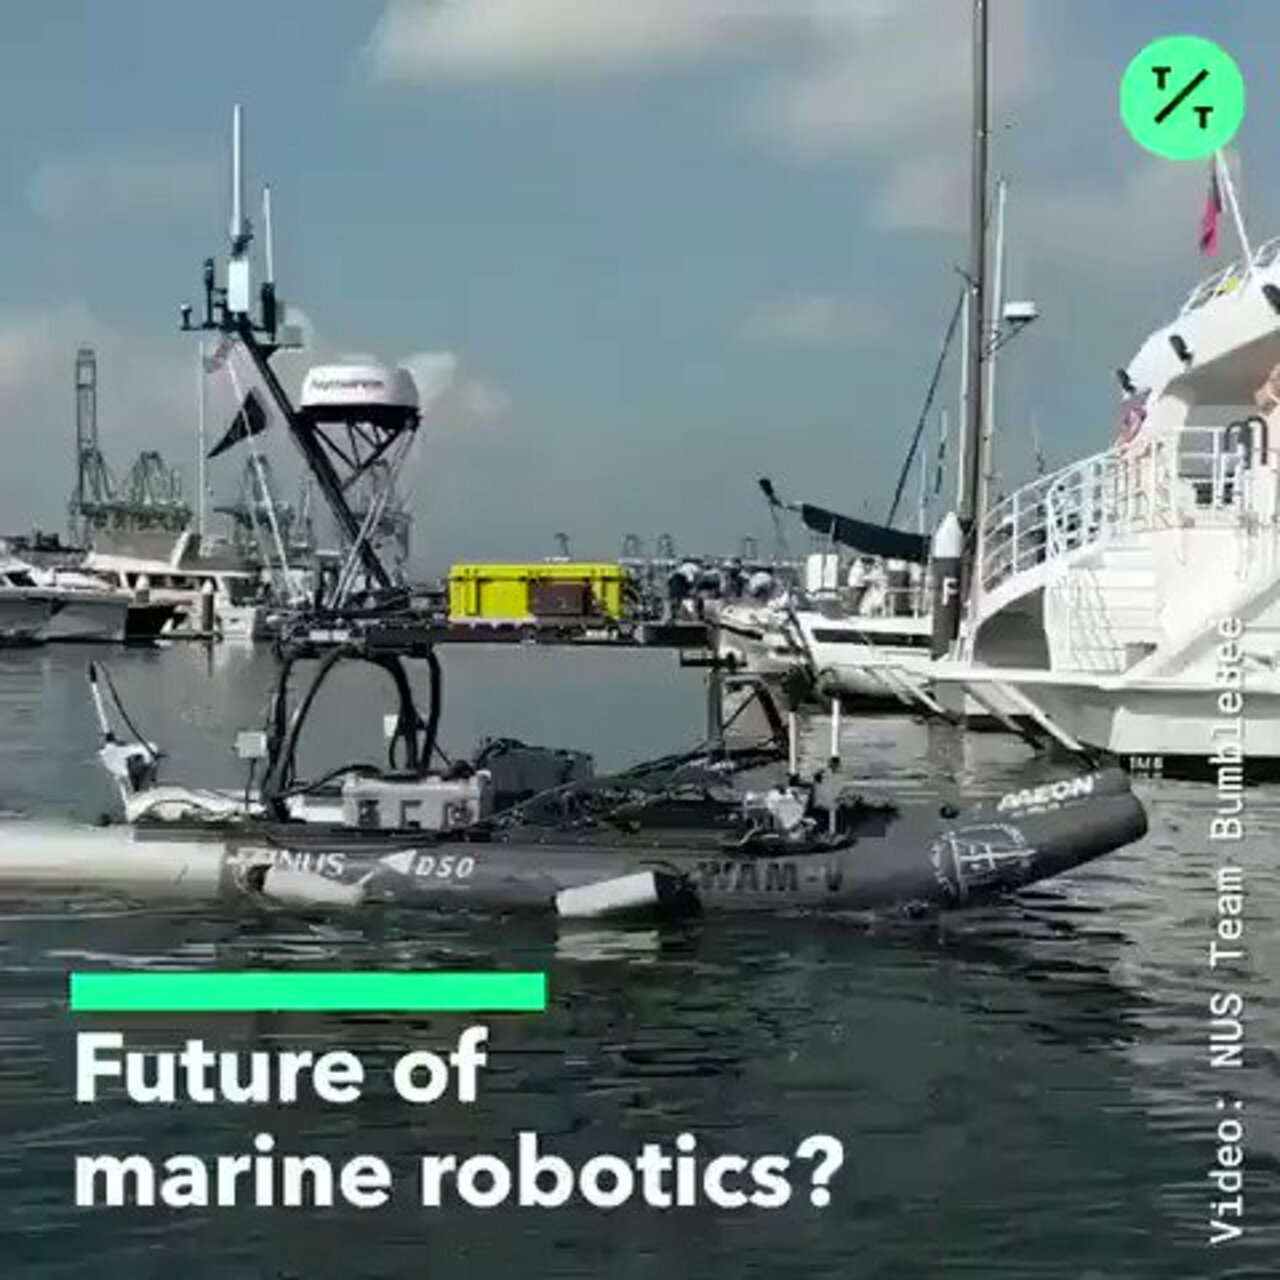 Future of marine #Robotics by @QuickTake #AI #MachineLearning #ArtificialIntelligence #ML #Innovation #Autonomous #TechForGood #FutureOfWork cc: @ronald_vanloon @pbalakrishnarao @dirkschaar https://t.co/4dzX8mnL4K